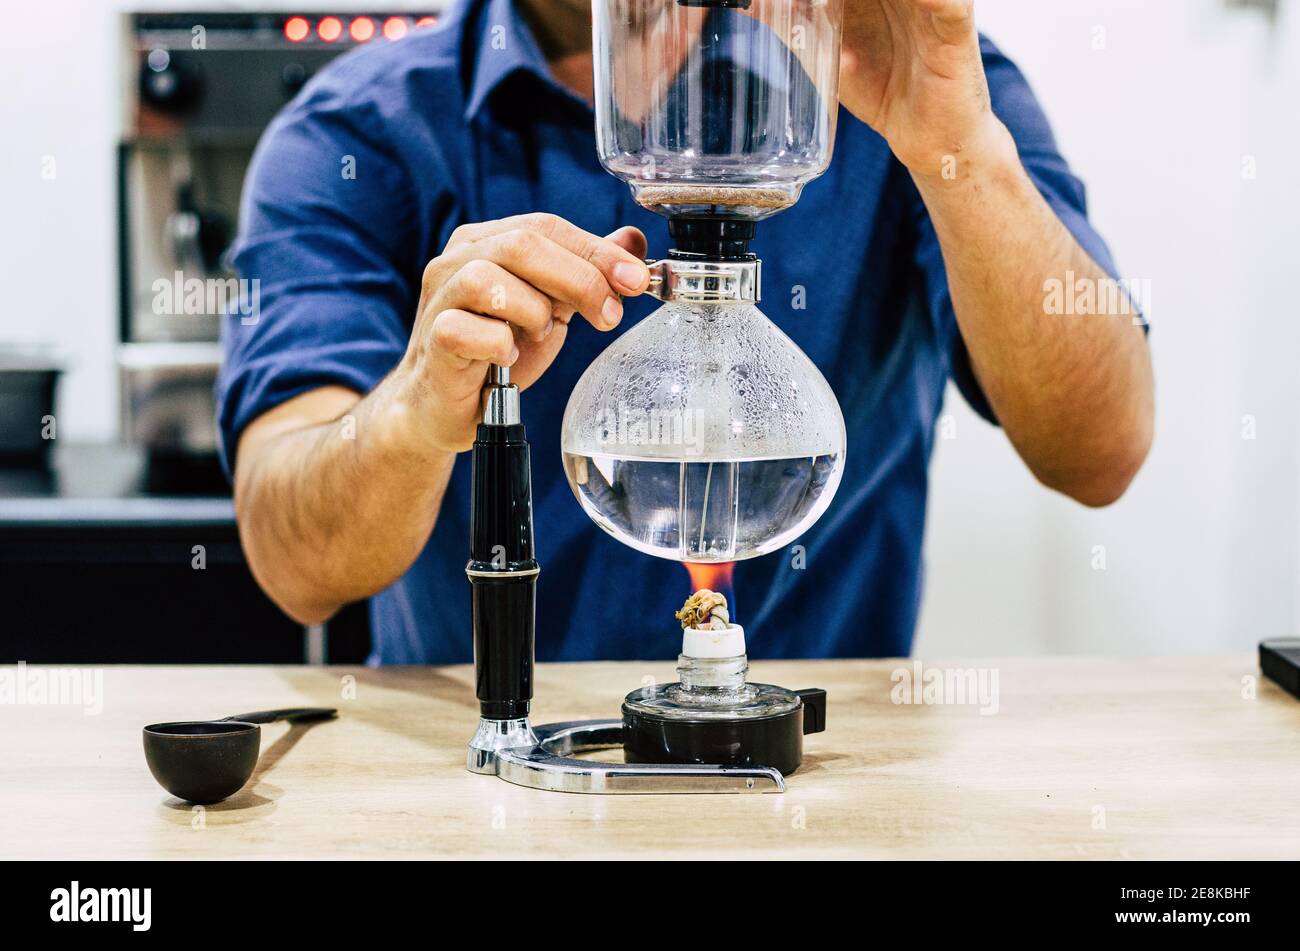 https://c8.alamy.com/comp/2E8KBHF/professional-coffee-maker-barista-using-coffee-siphon-brewing-hot-espresso-at-coffee-shop-2E8KBHF.jpg